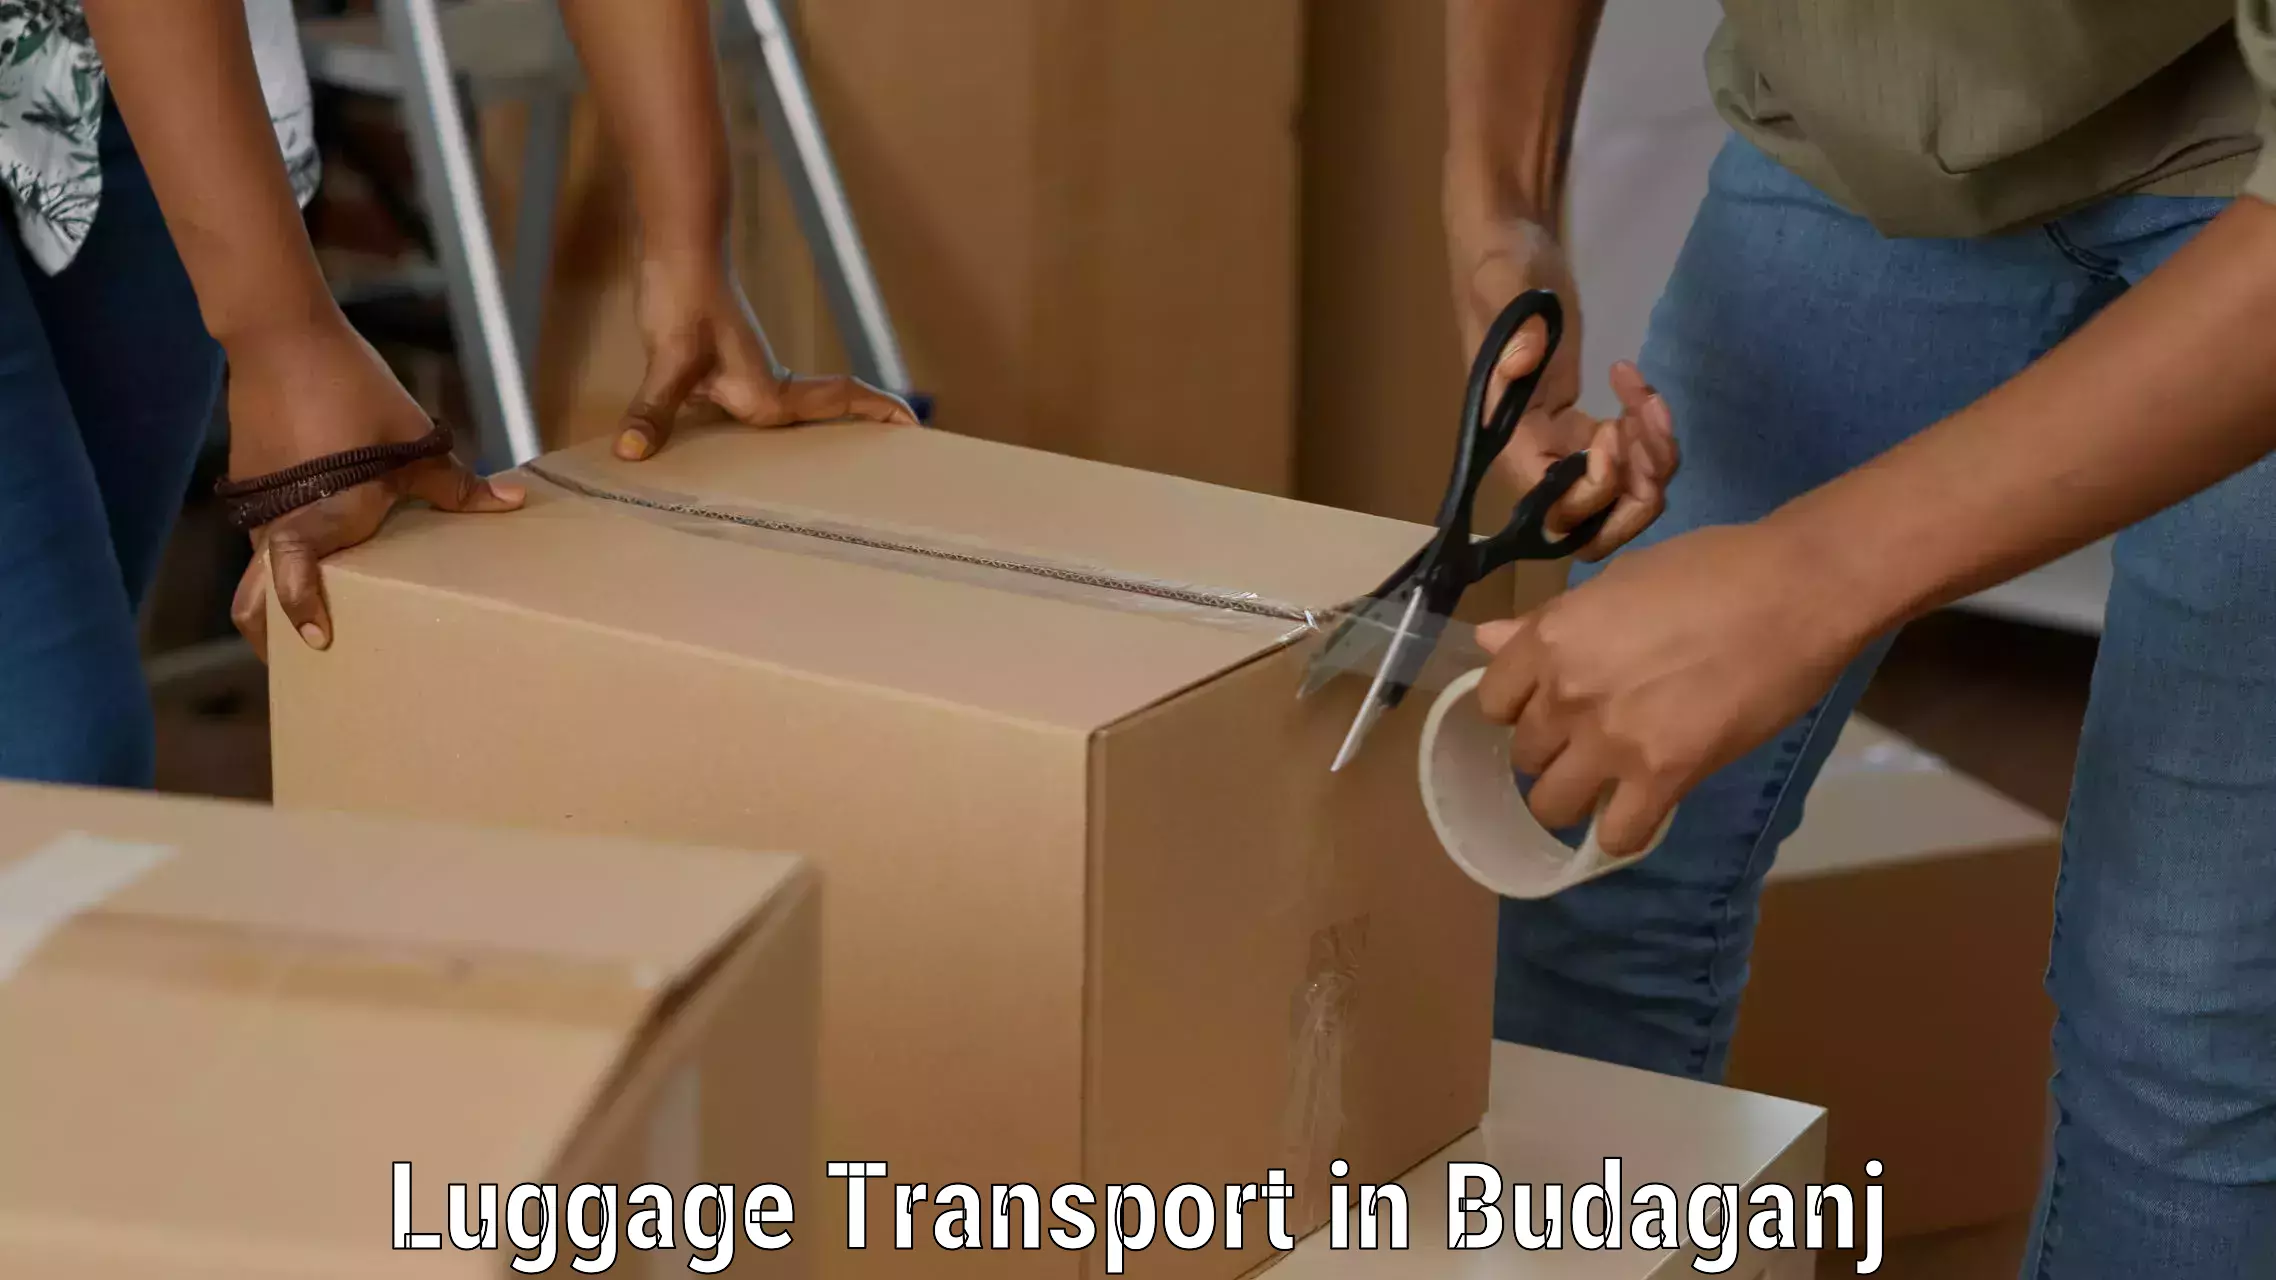 Multi-destination luggage transport in Budaganj